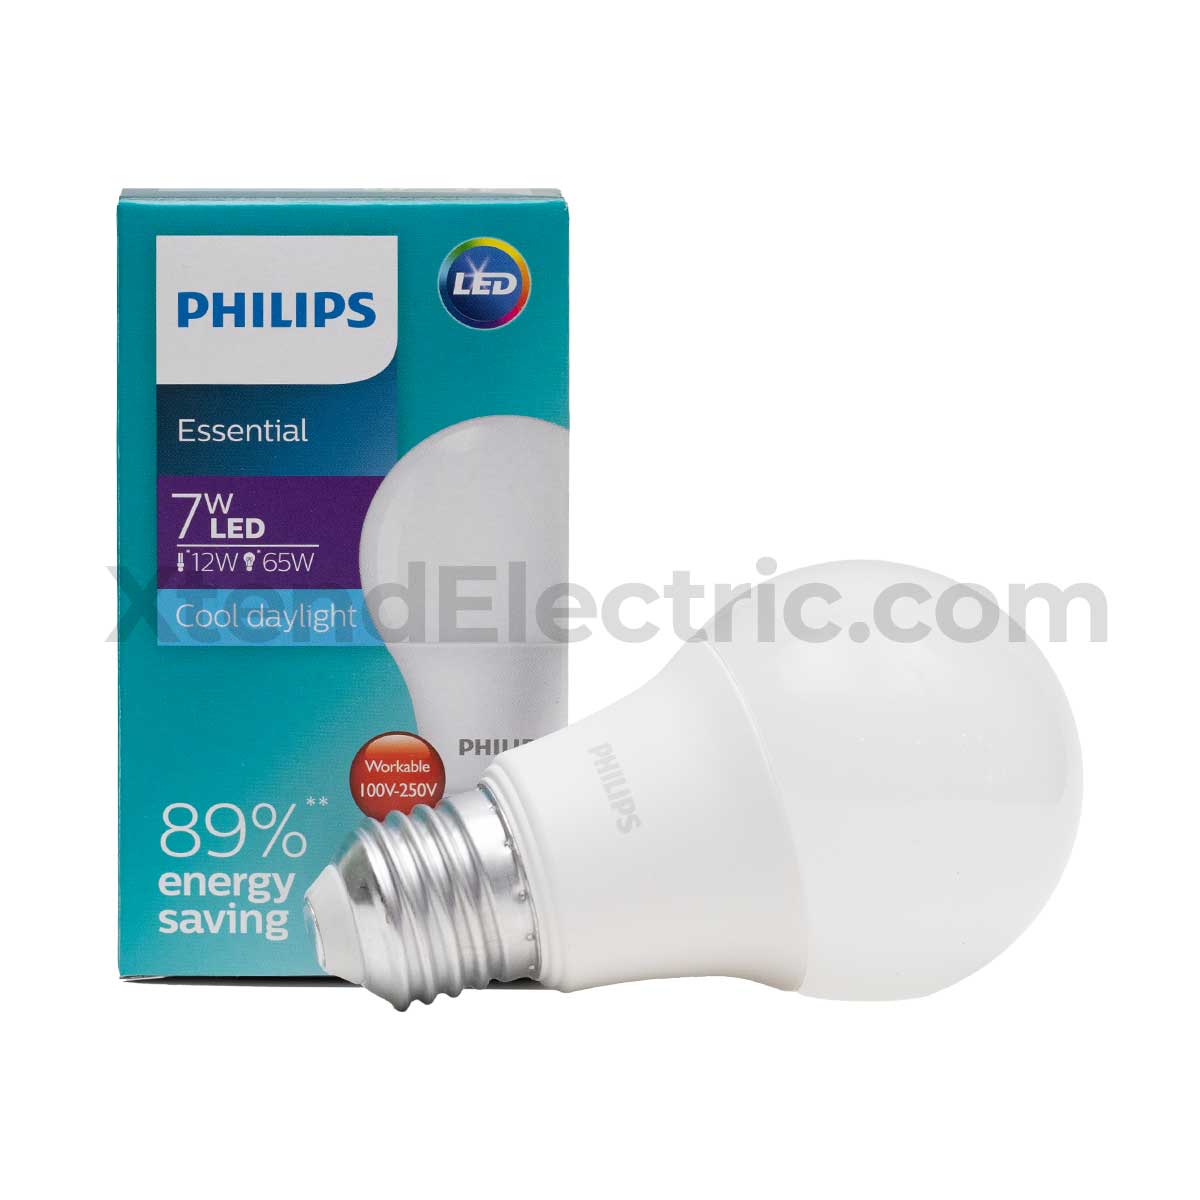 Philips-LED-Bulb-7w-DL-01